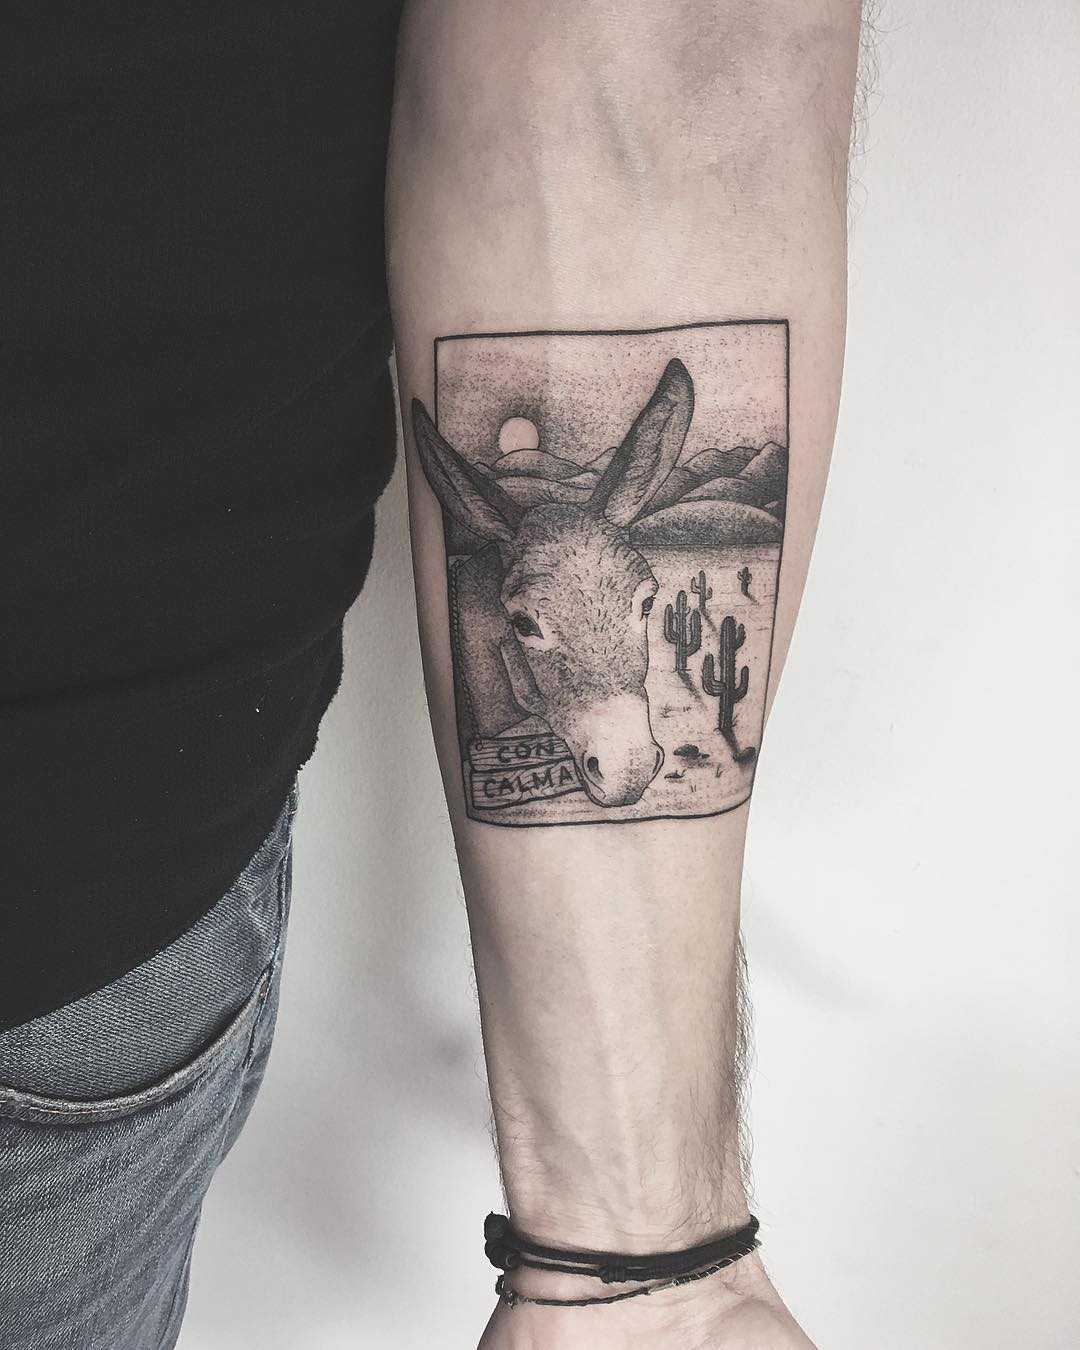 Donkey tattoo by tattooist Spence @zz tattoo